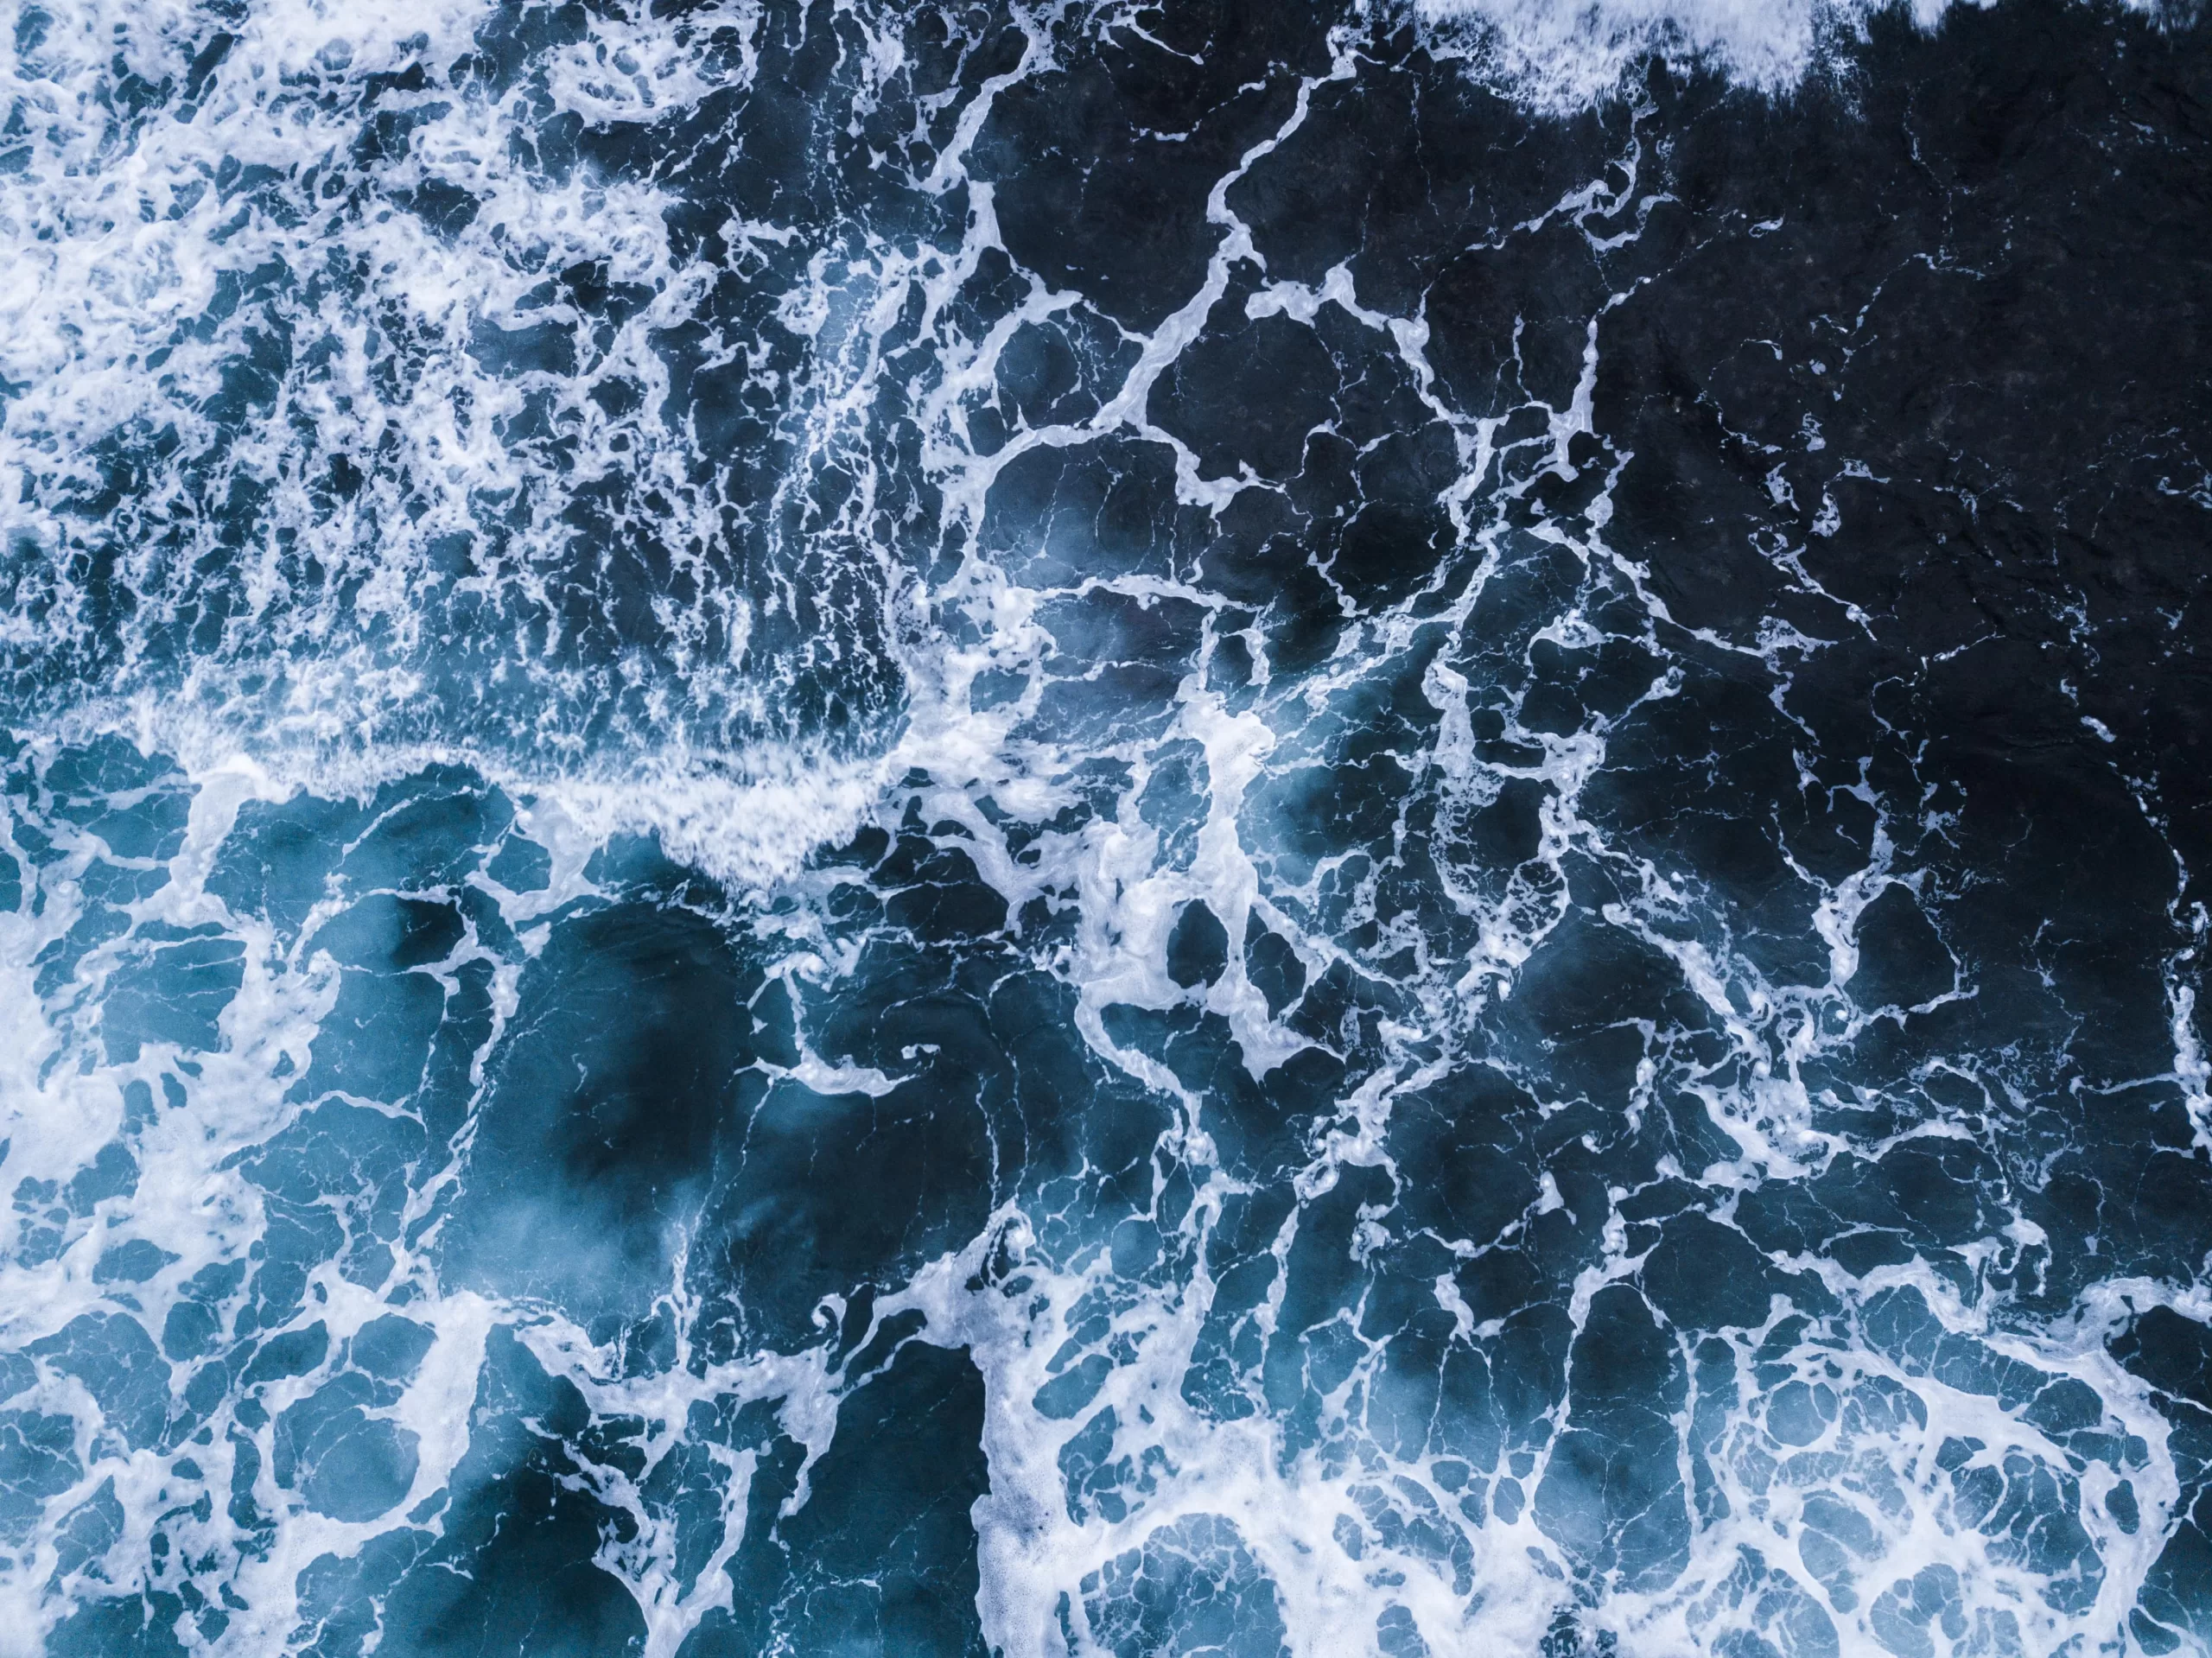 Joshua spires drone photography of ocean